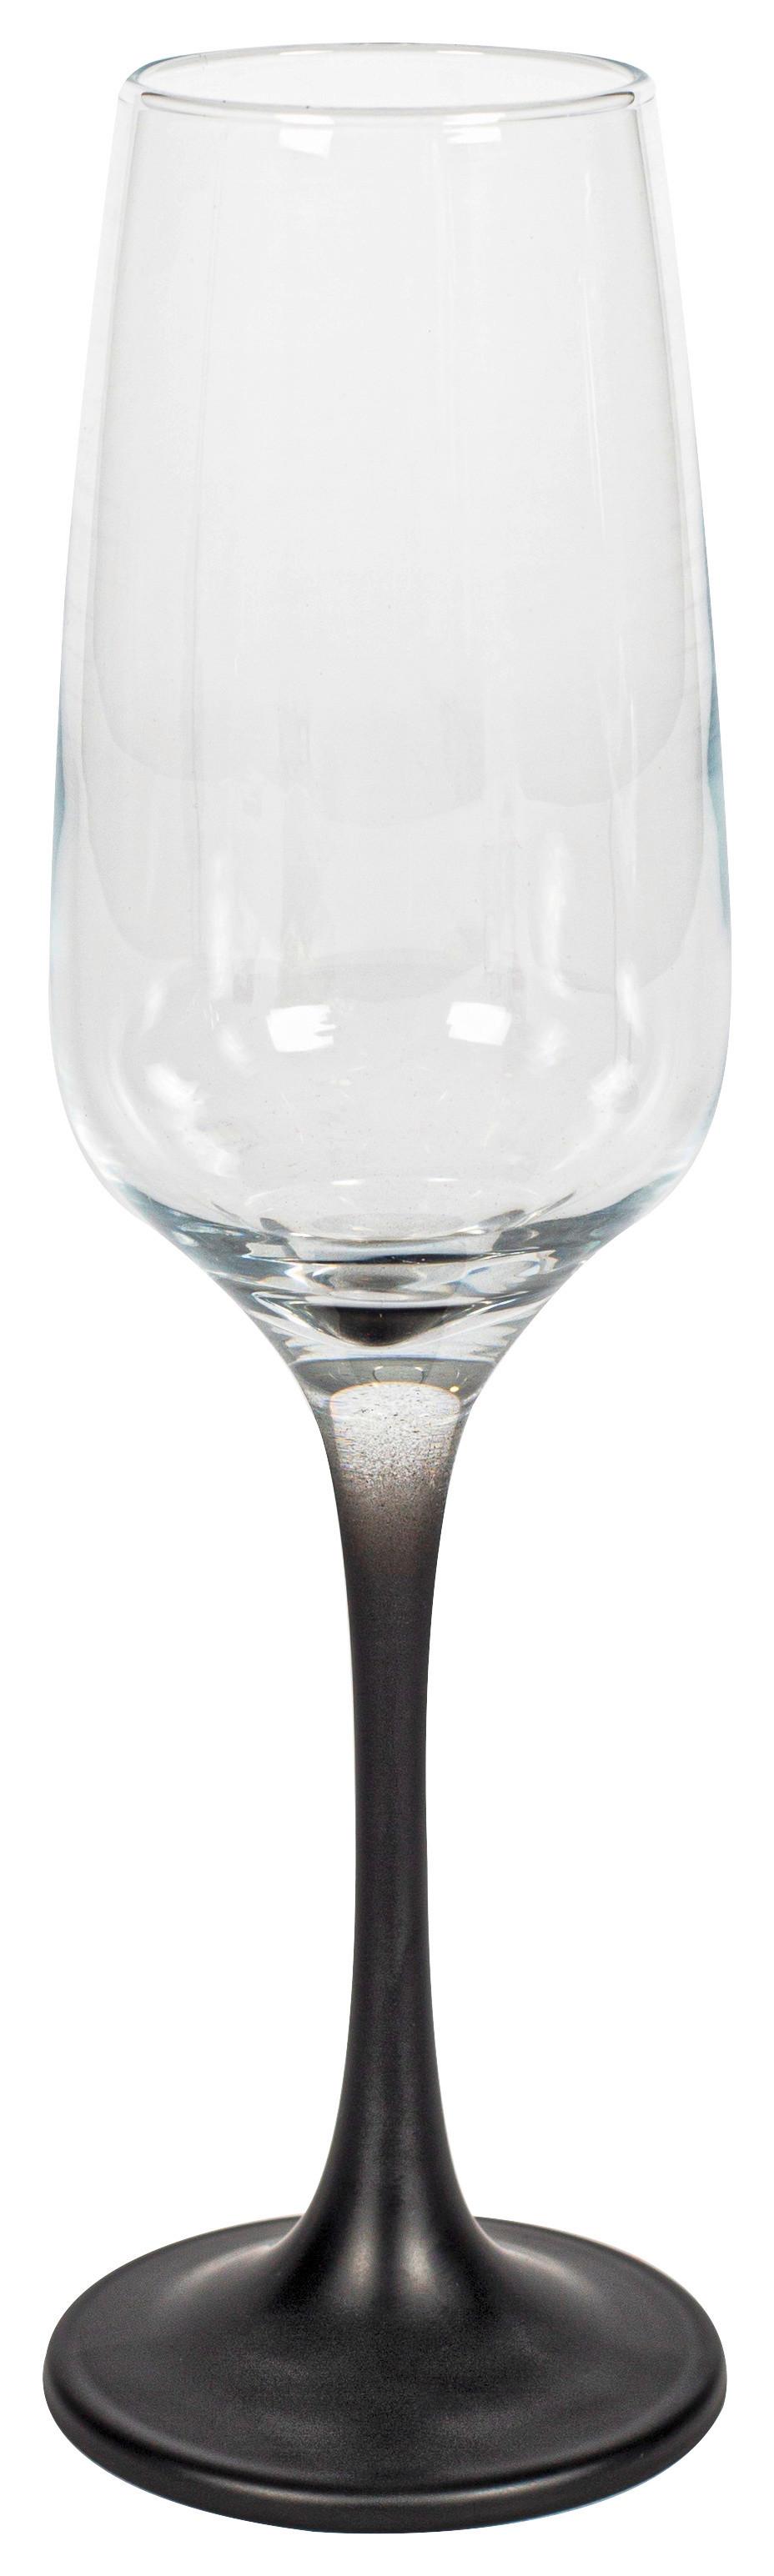 Pahar de vin spumant Nini - clar/negru, Modern, sticlă (4,5/22,6cm) - Premium Living